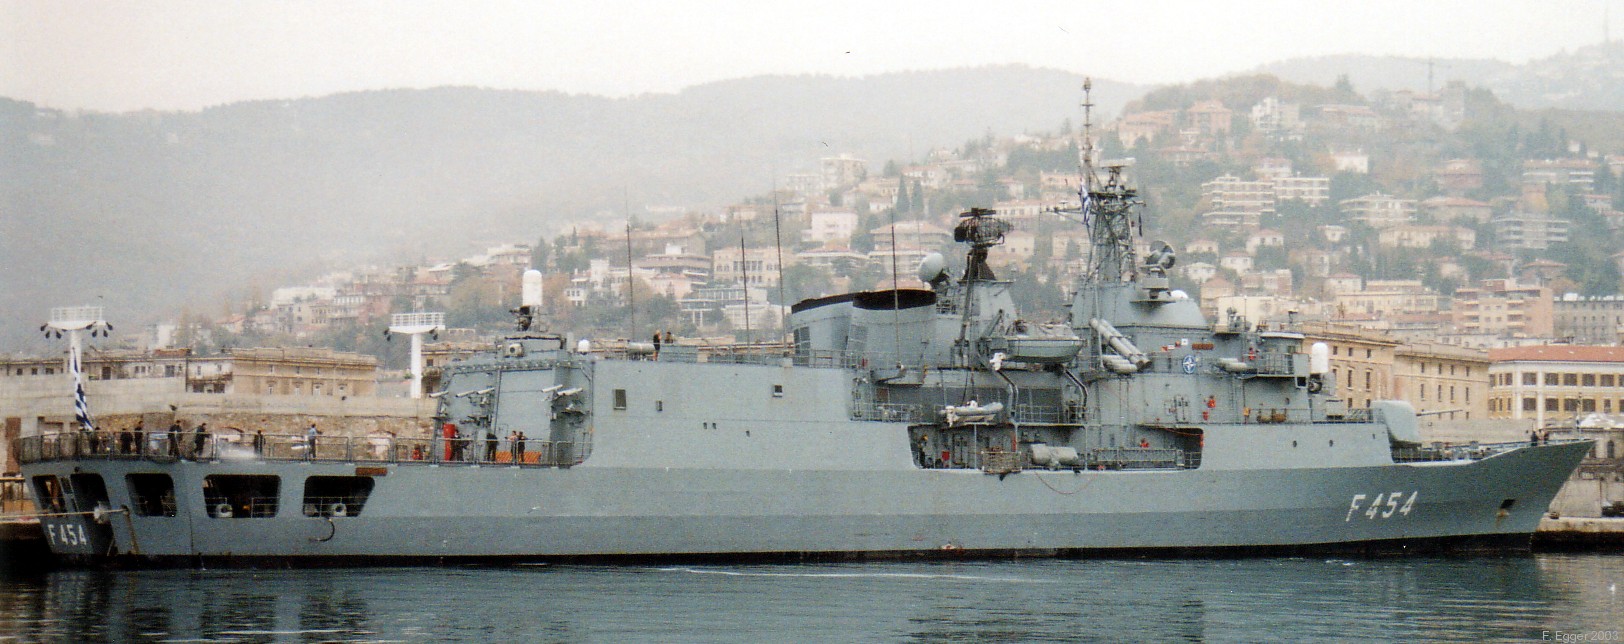 f 454 hs psara hydra class frigate meko-200hn hellenic navy greece nato standing naval force mediterranean stanavformed trieste italy 2003 04